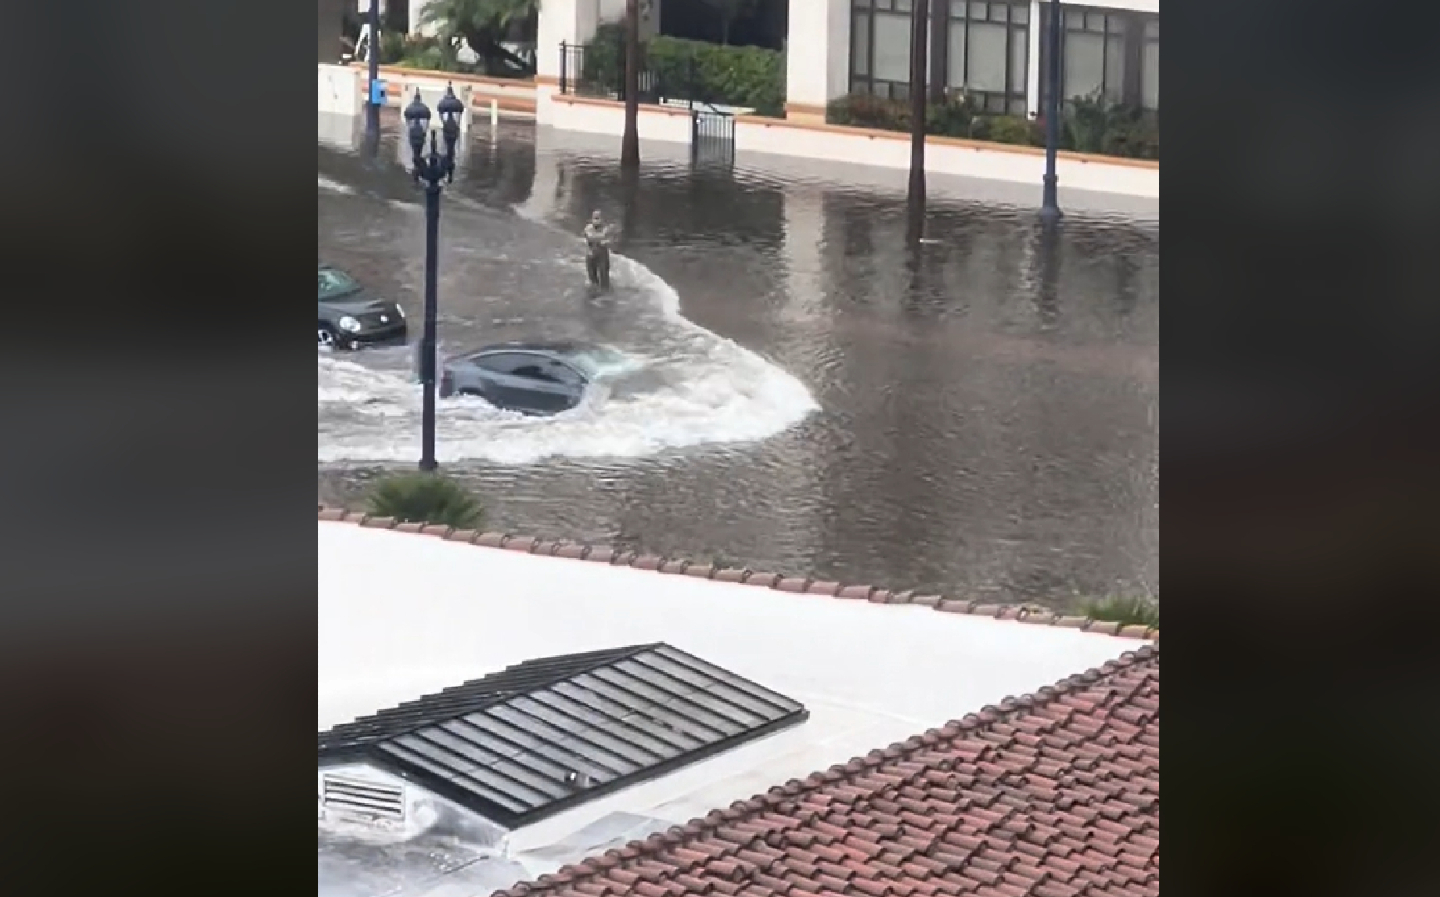 A Tesla drives through flood water in San Diego